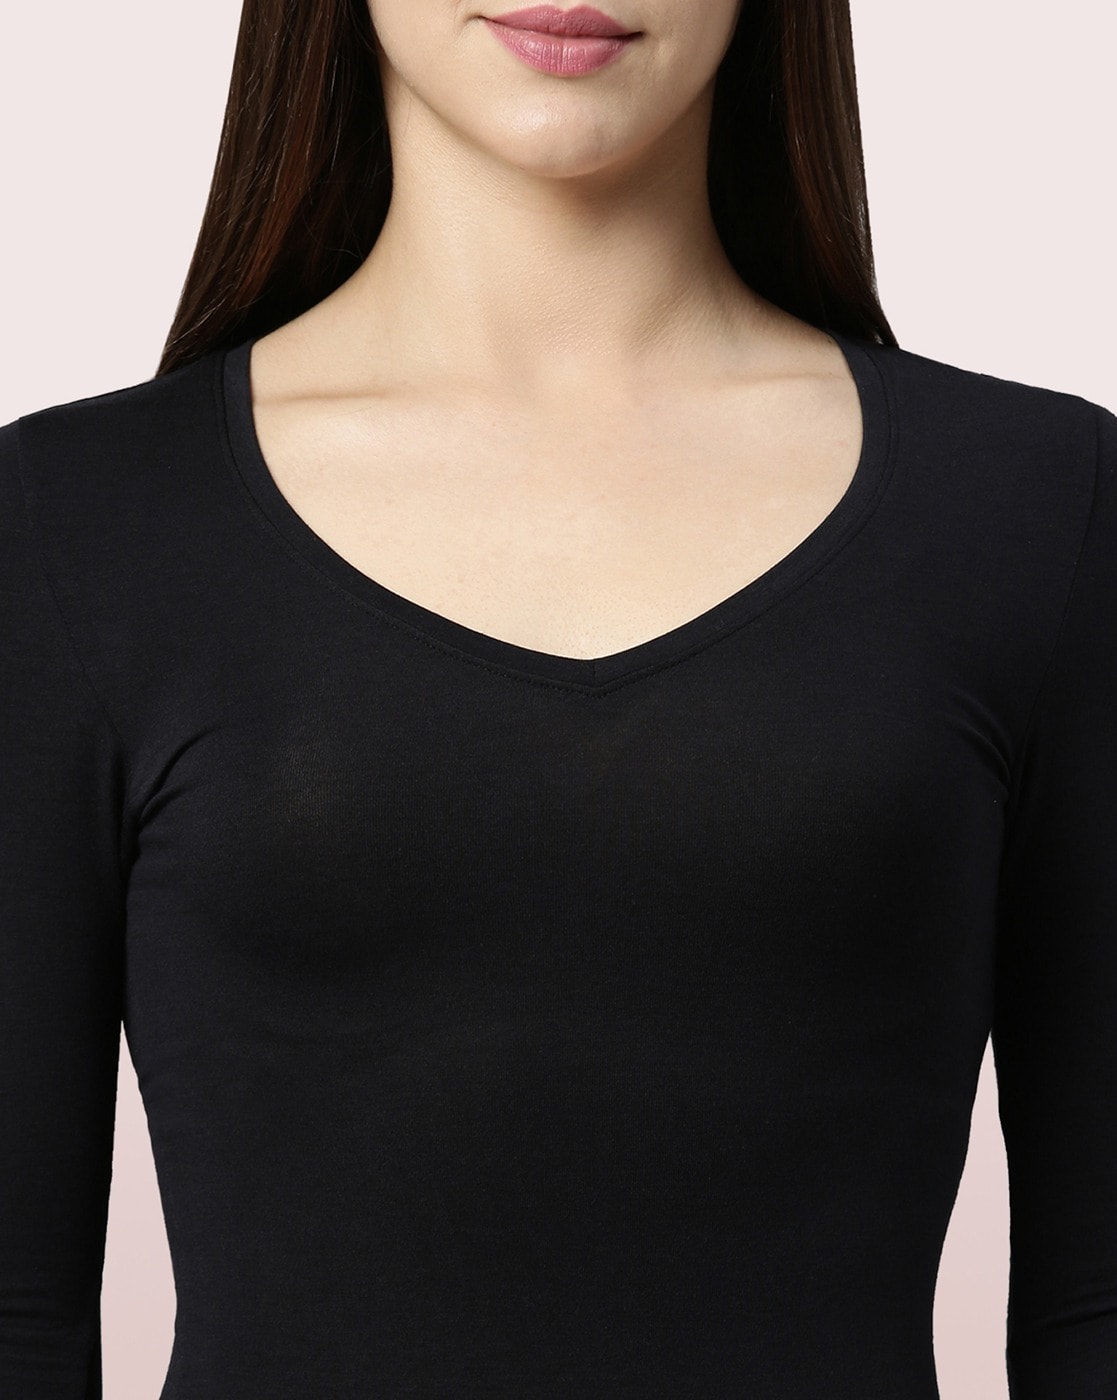 Buy Black Thermal Wear for Women by Enamor Online